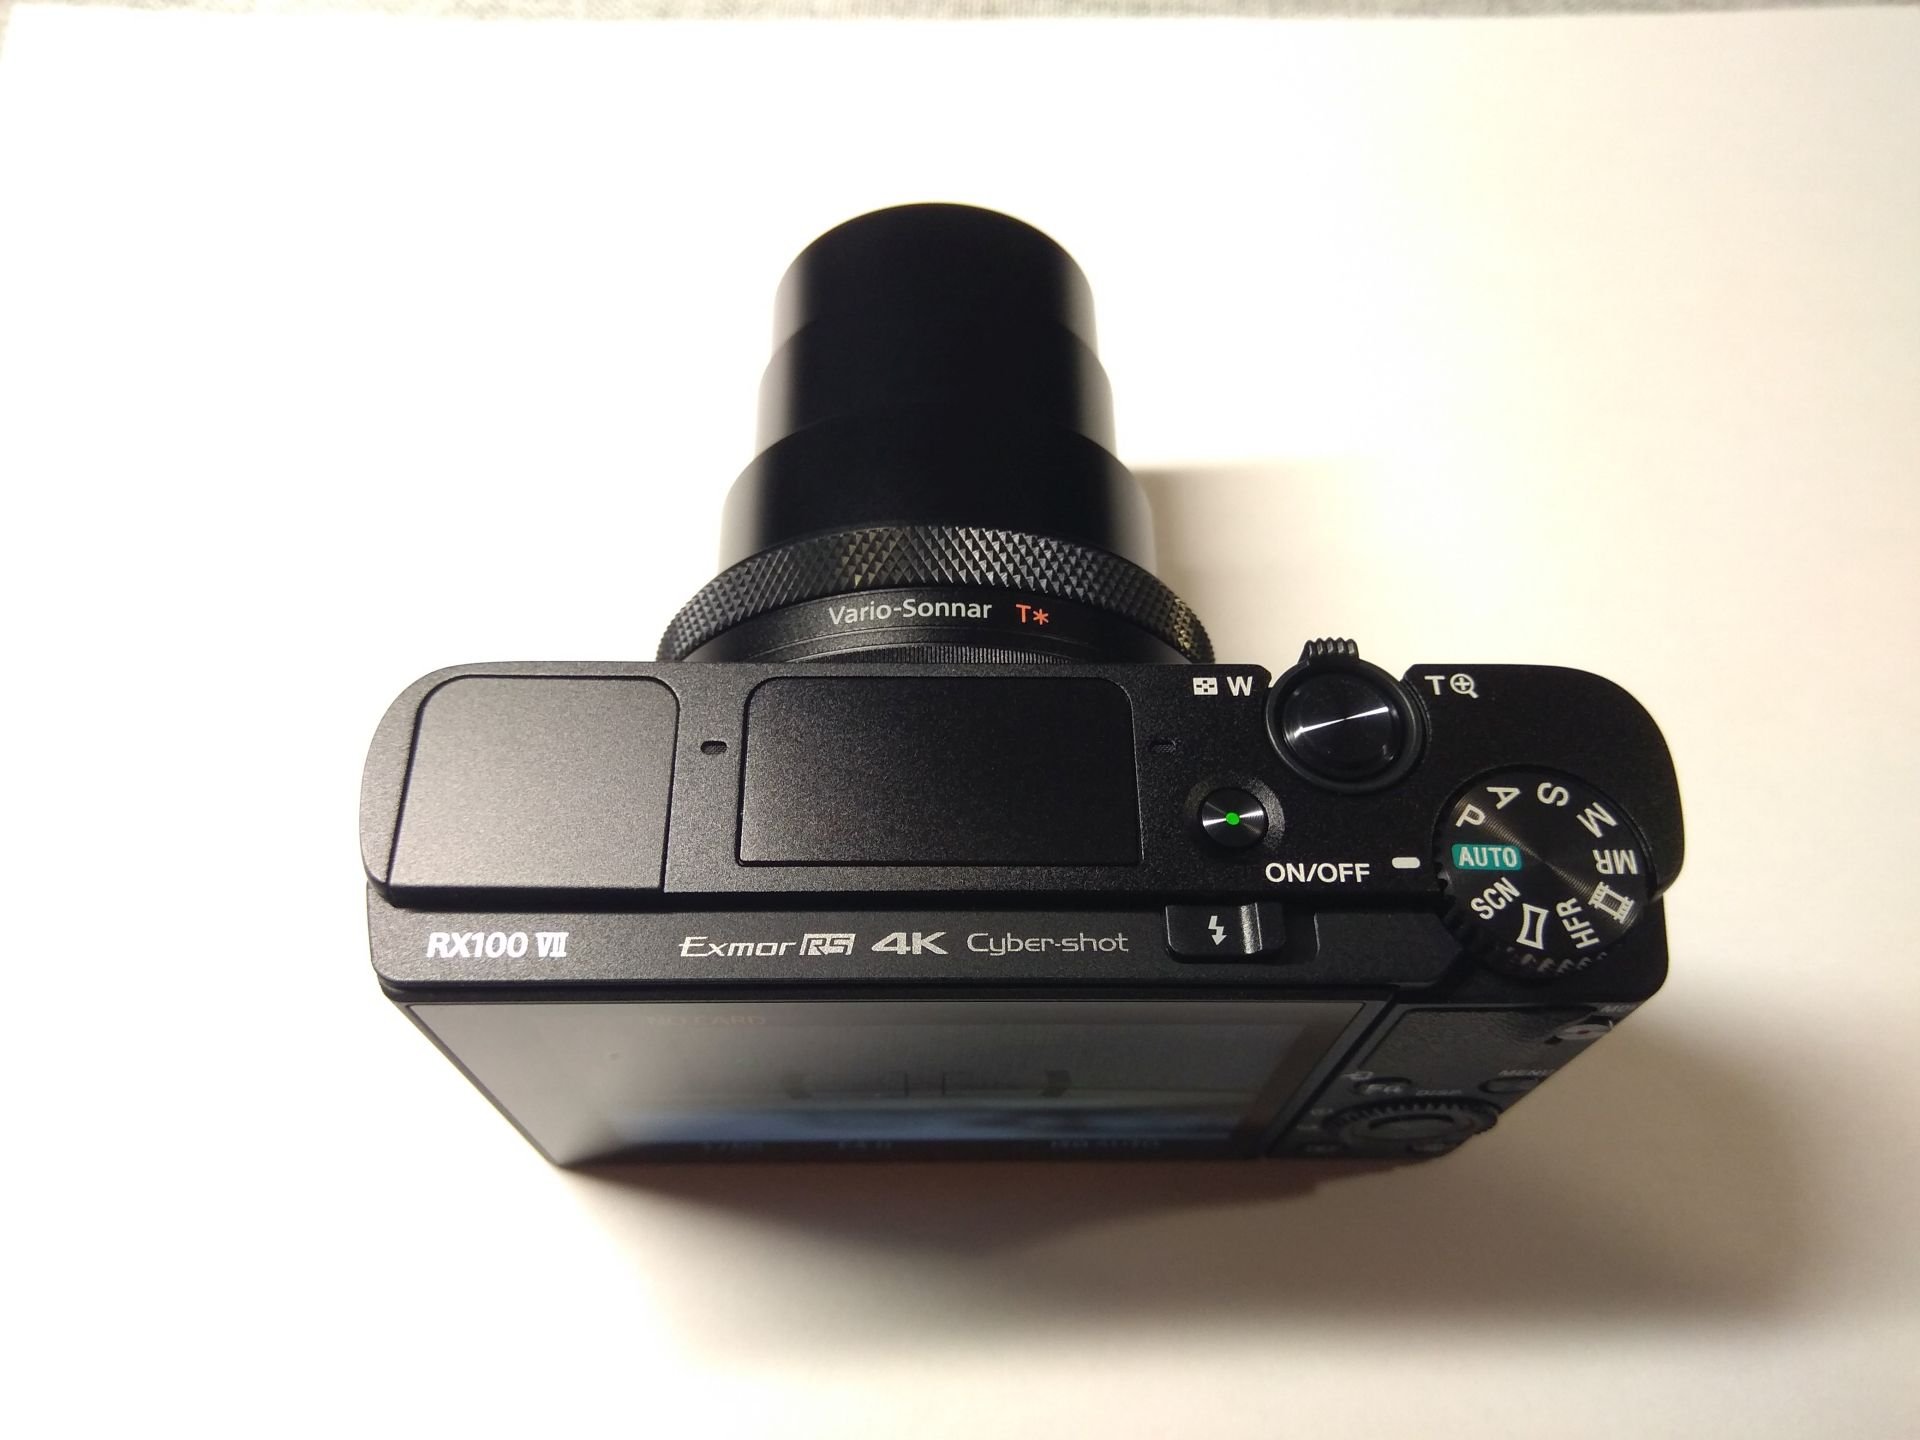 Sony DSC-RX100 M7 (2).jpg